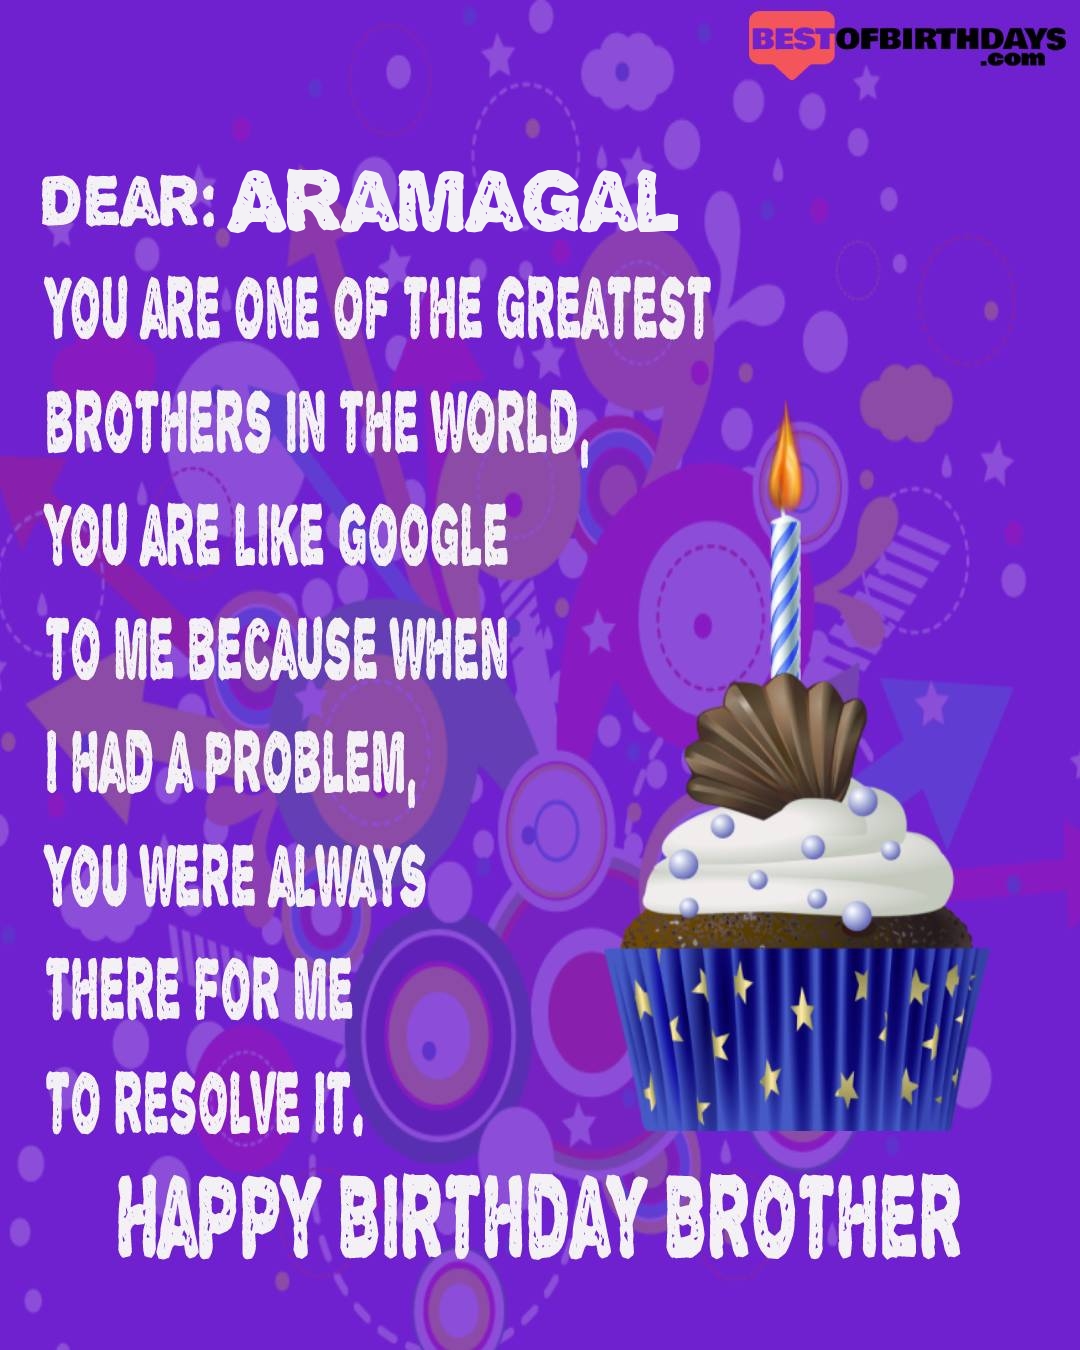 Happy birthday aramagal bhai brother bro